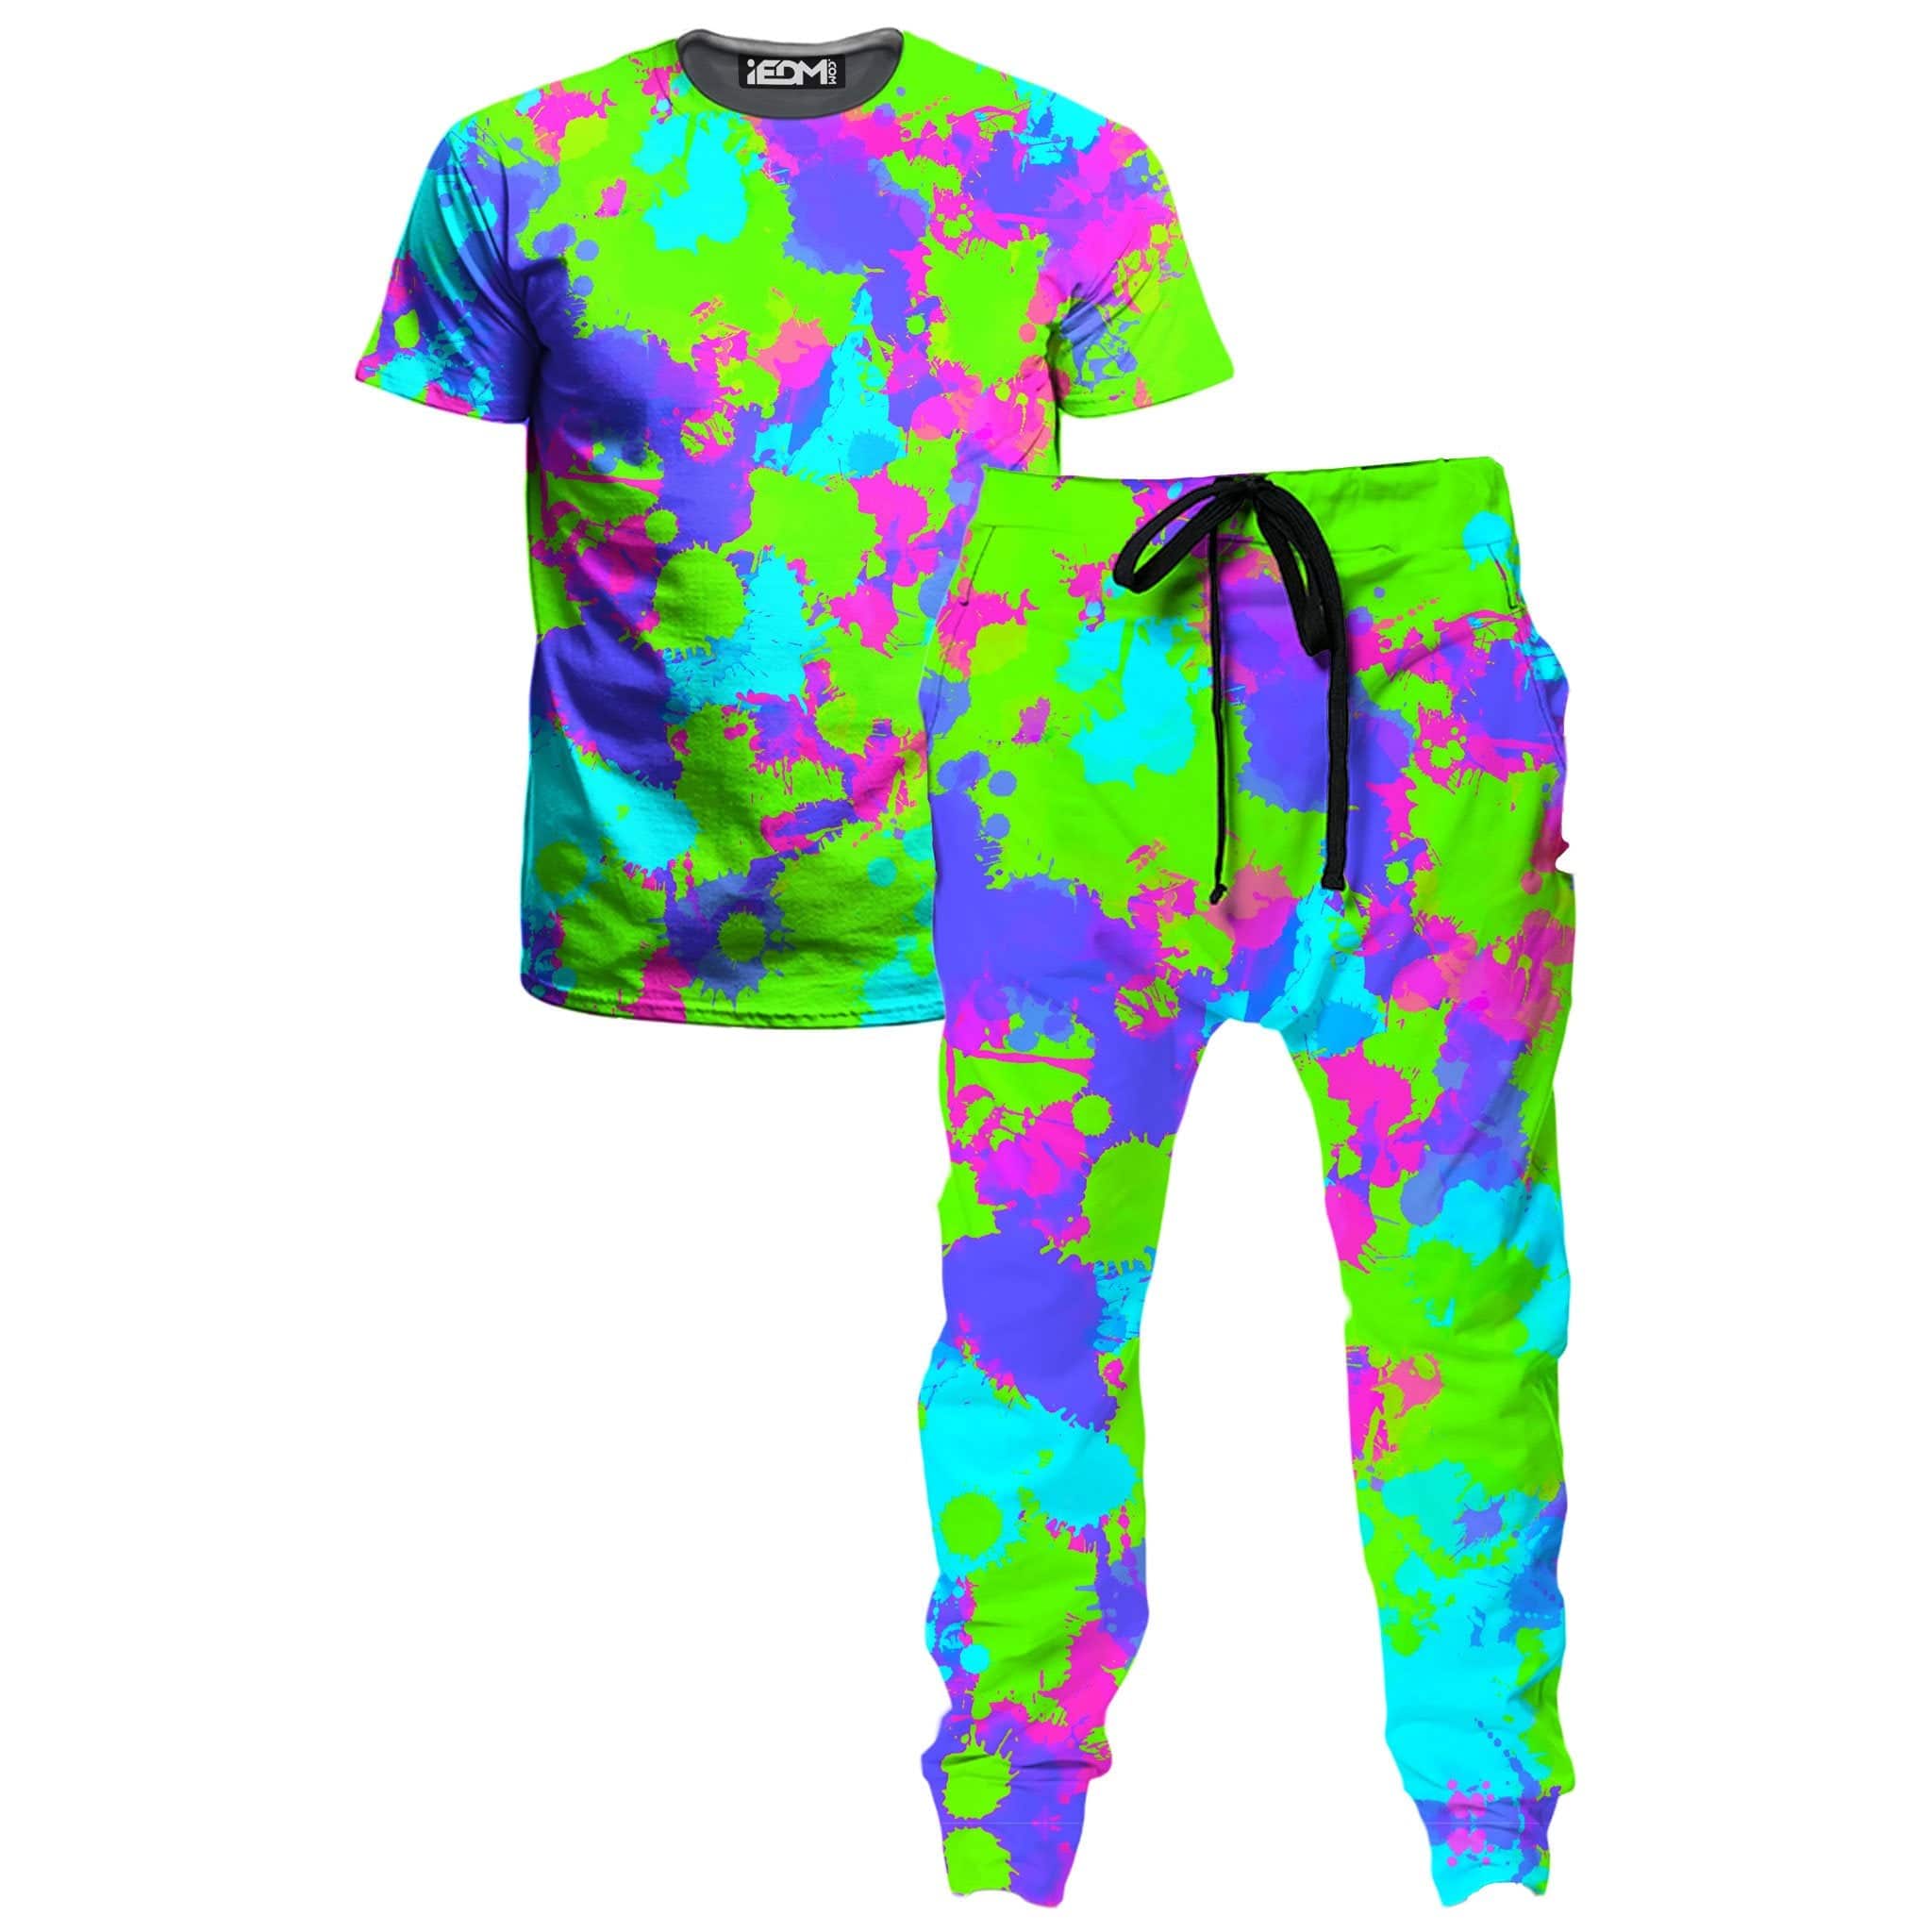 Neon Paint Splatter Party Costume, Neon Paint Colors,  Graphic T-Shirt  Dress for Sale by webstar2992